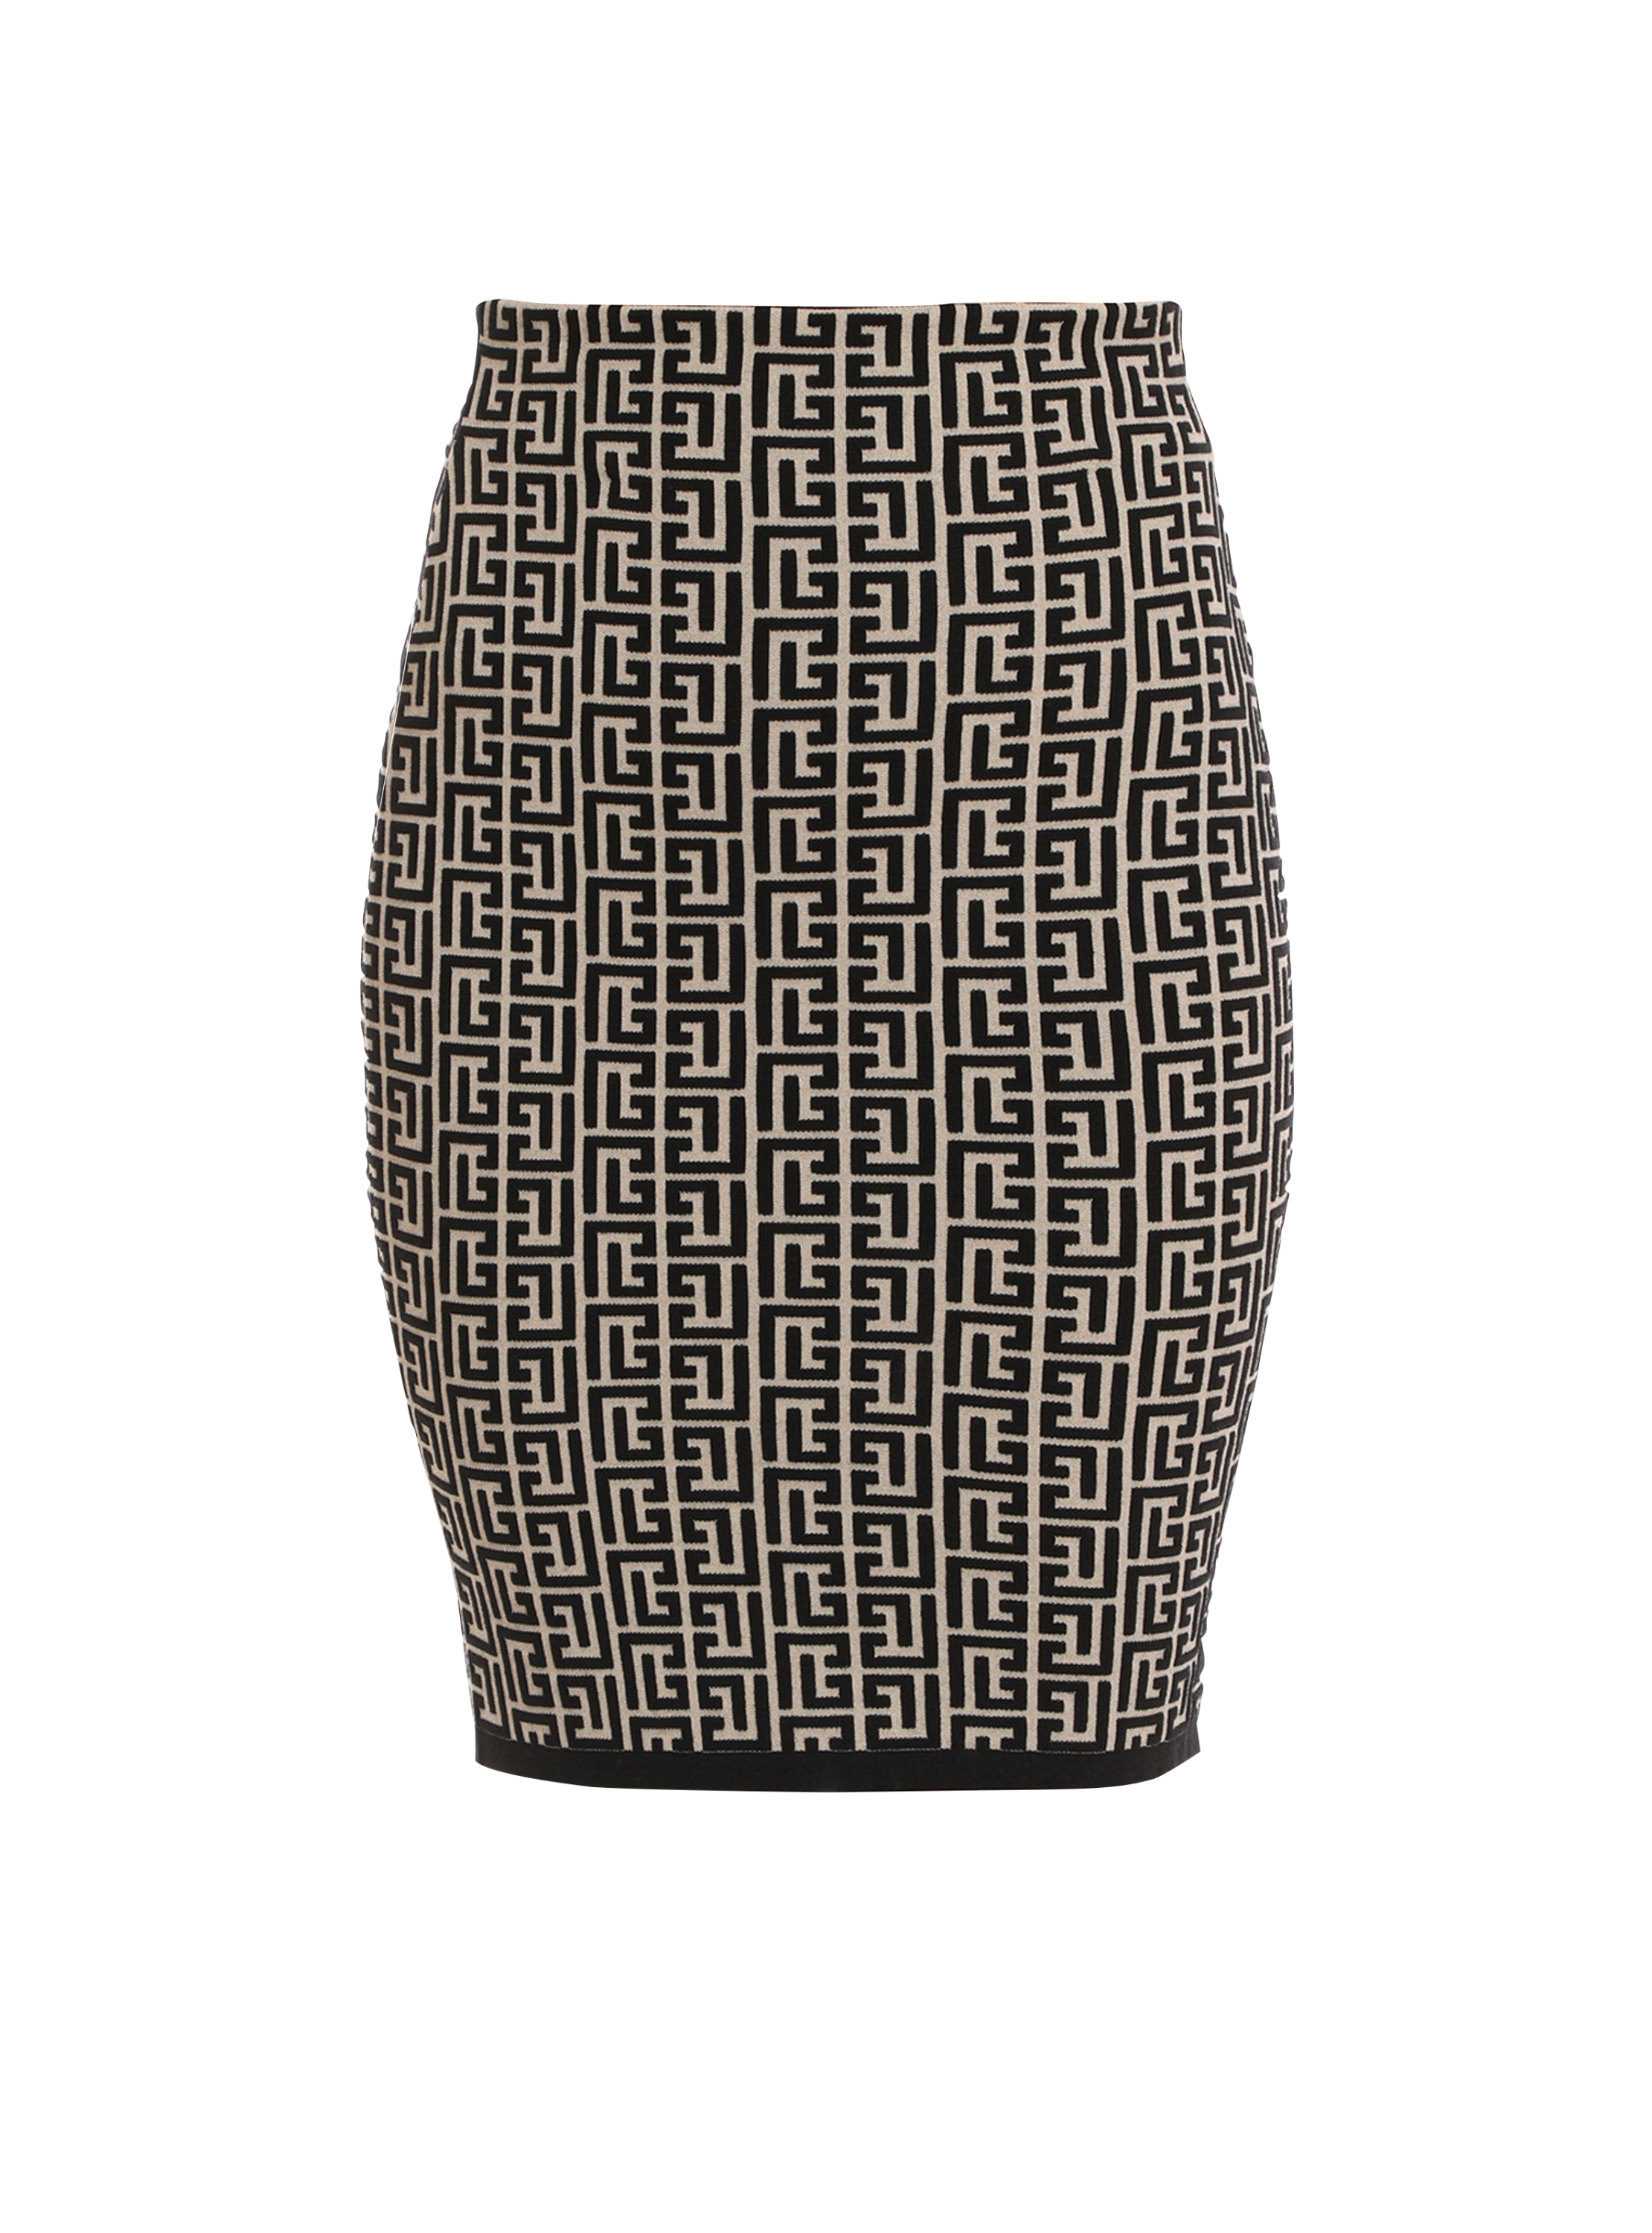 Balmain bicolor jacquard knit skirt, black, hi-res